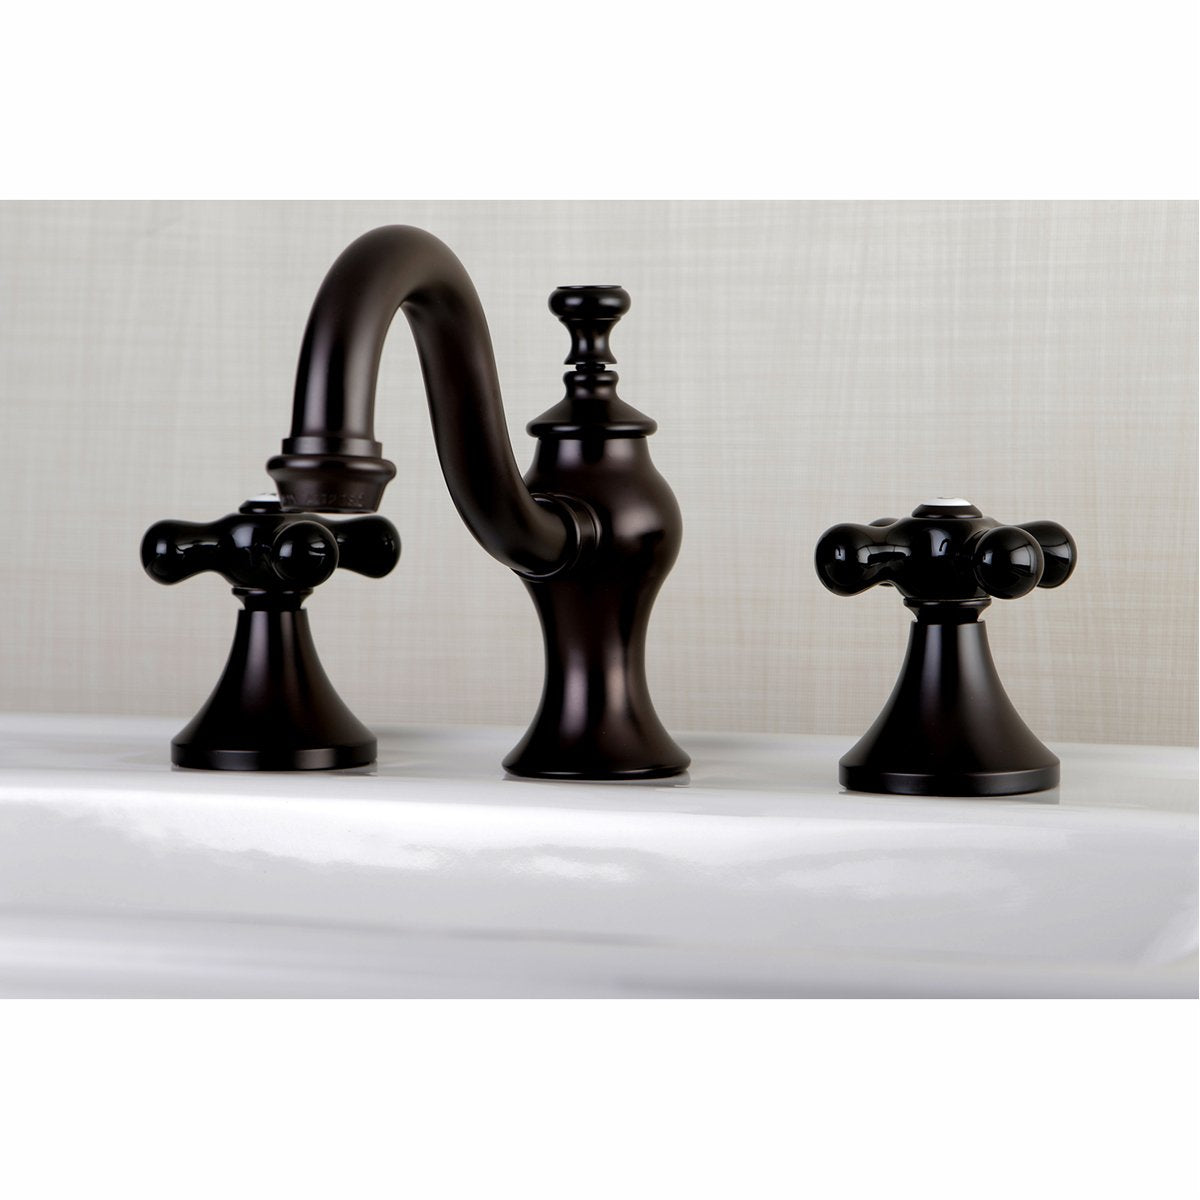 Kingston Brass Duchess Deck Mount 8-Inch Widespread 3-Hole Bathroom Faucet